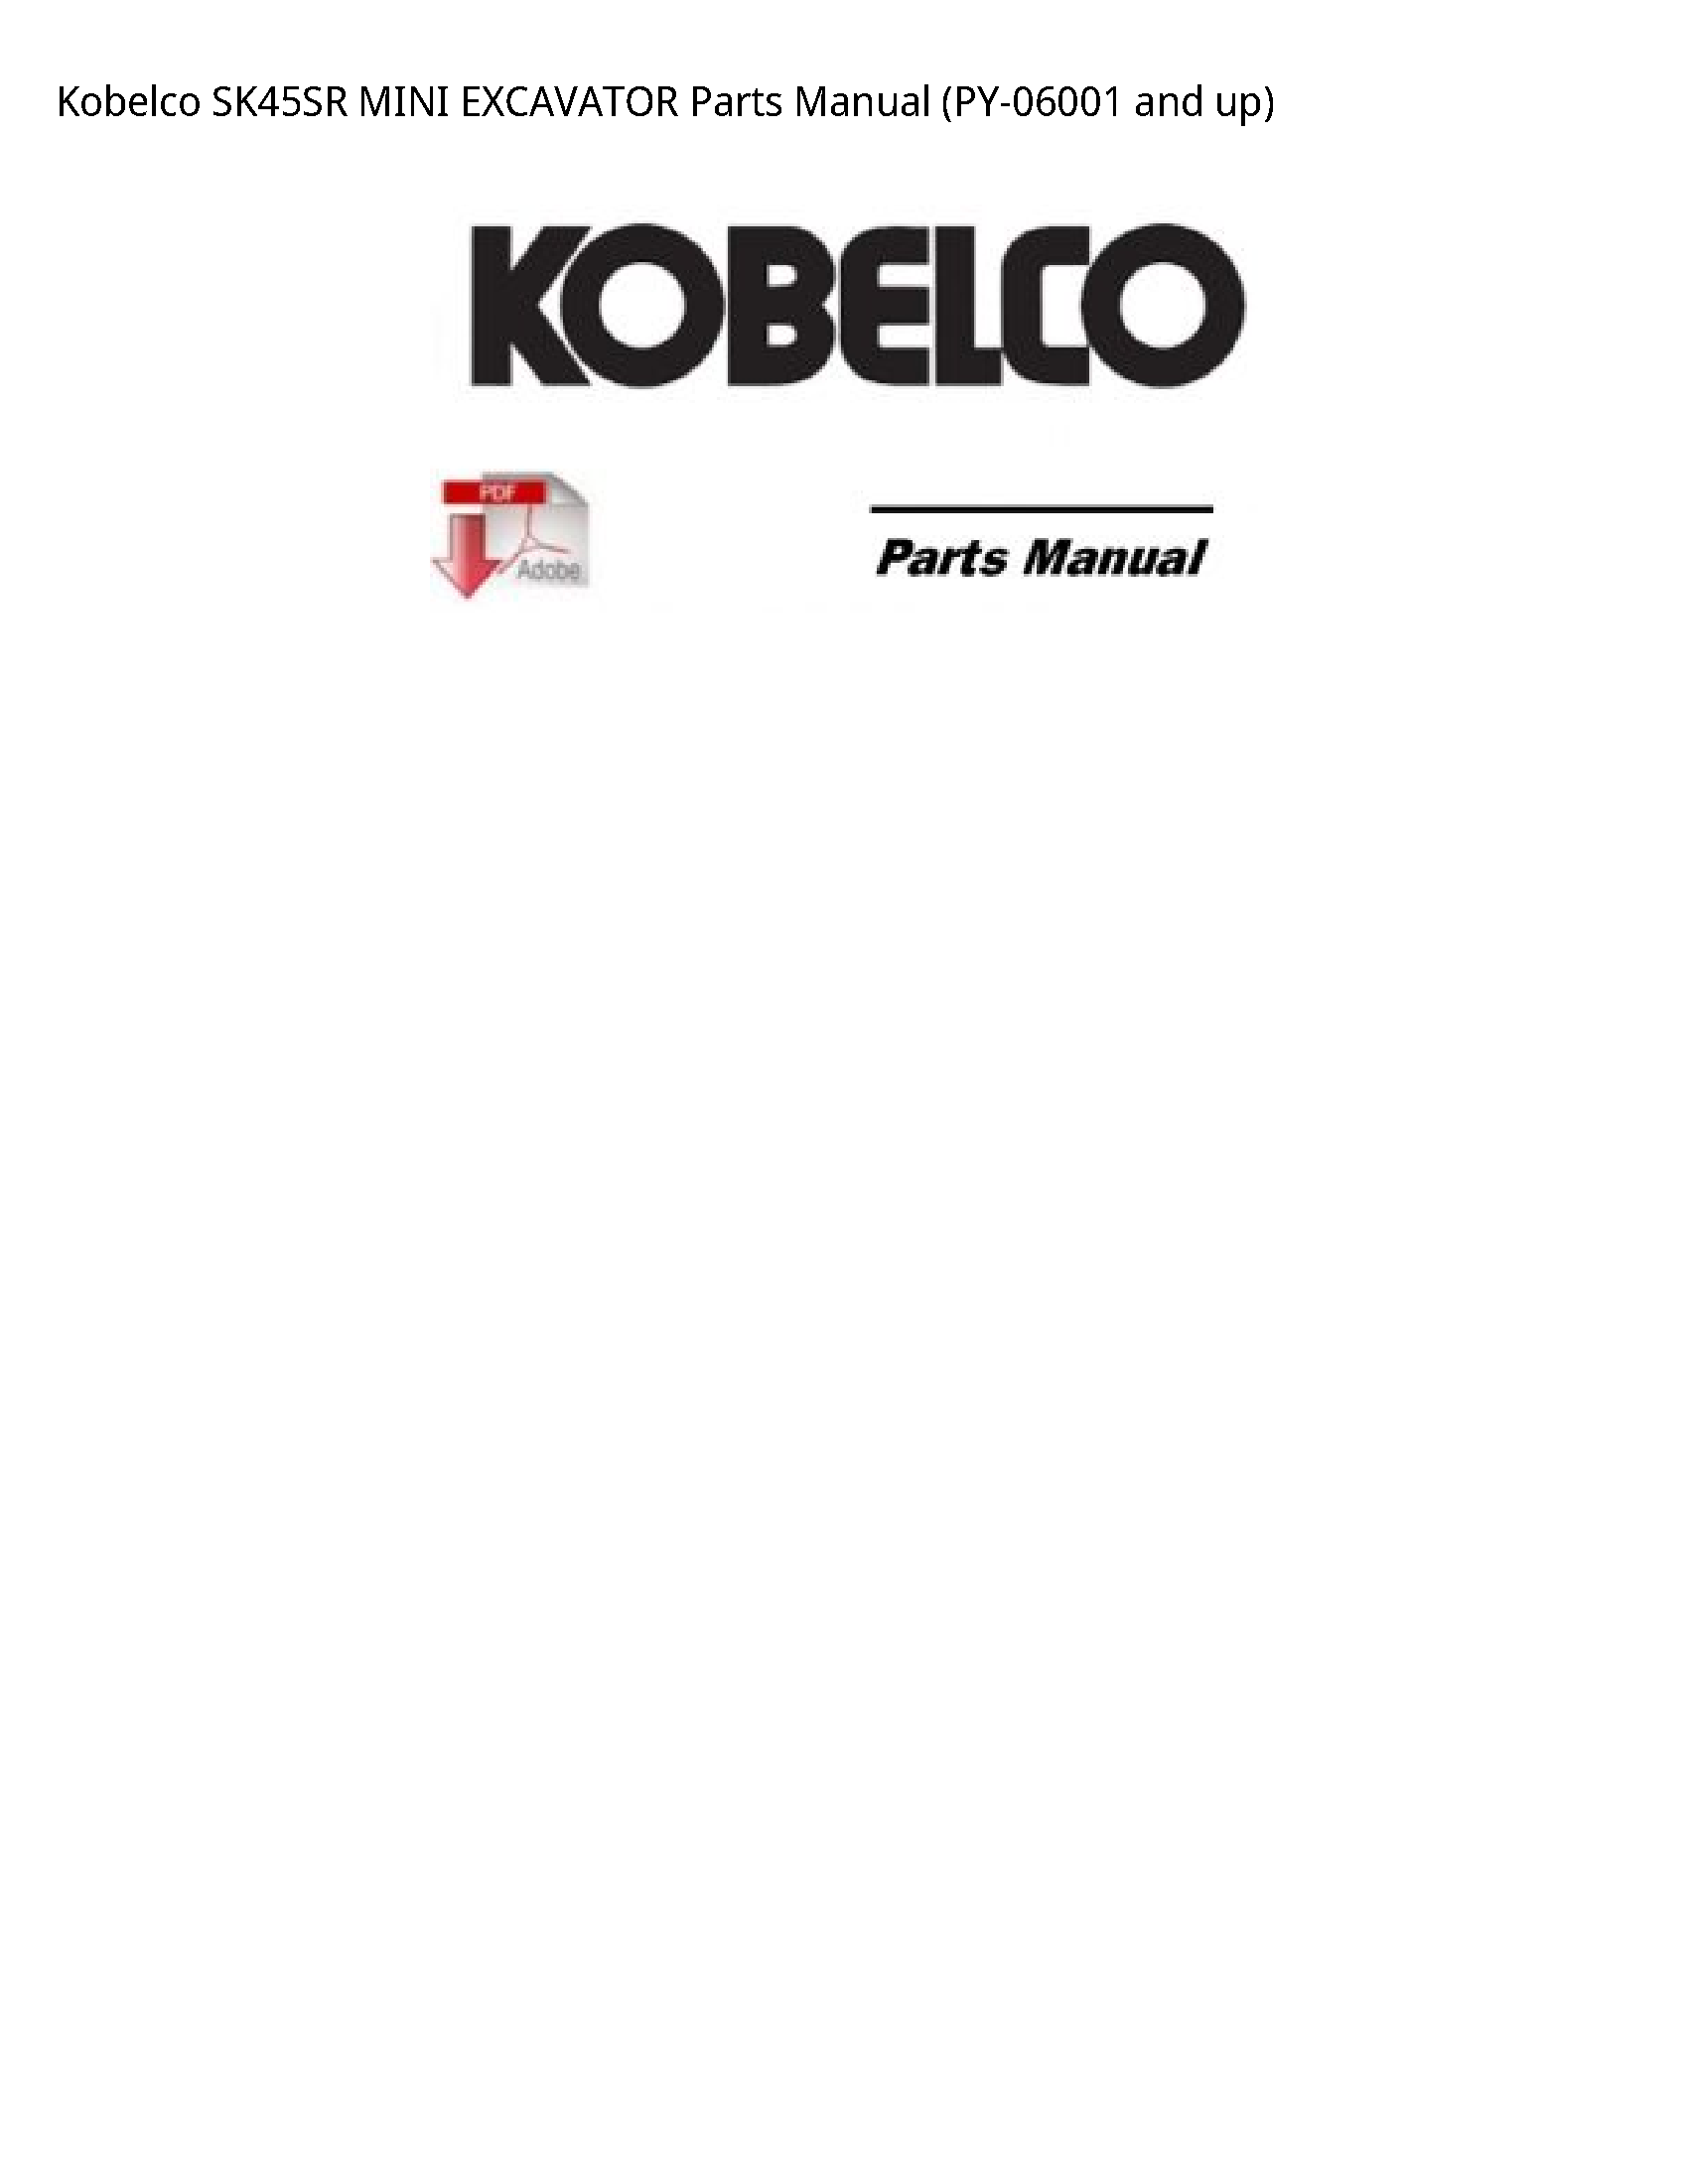 Kobelco SK45SR MINI EXCAVATOR Parts manual